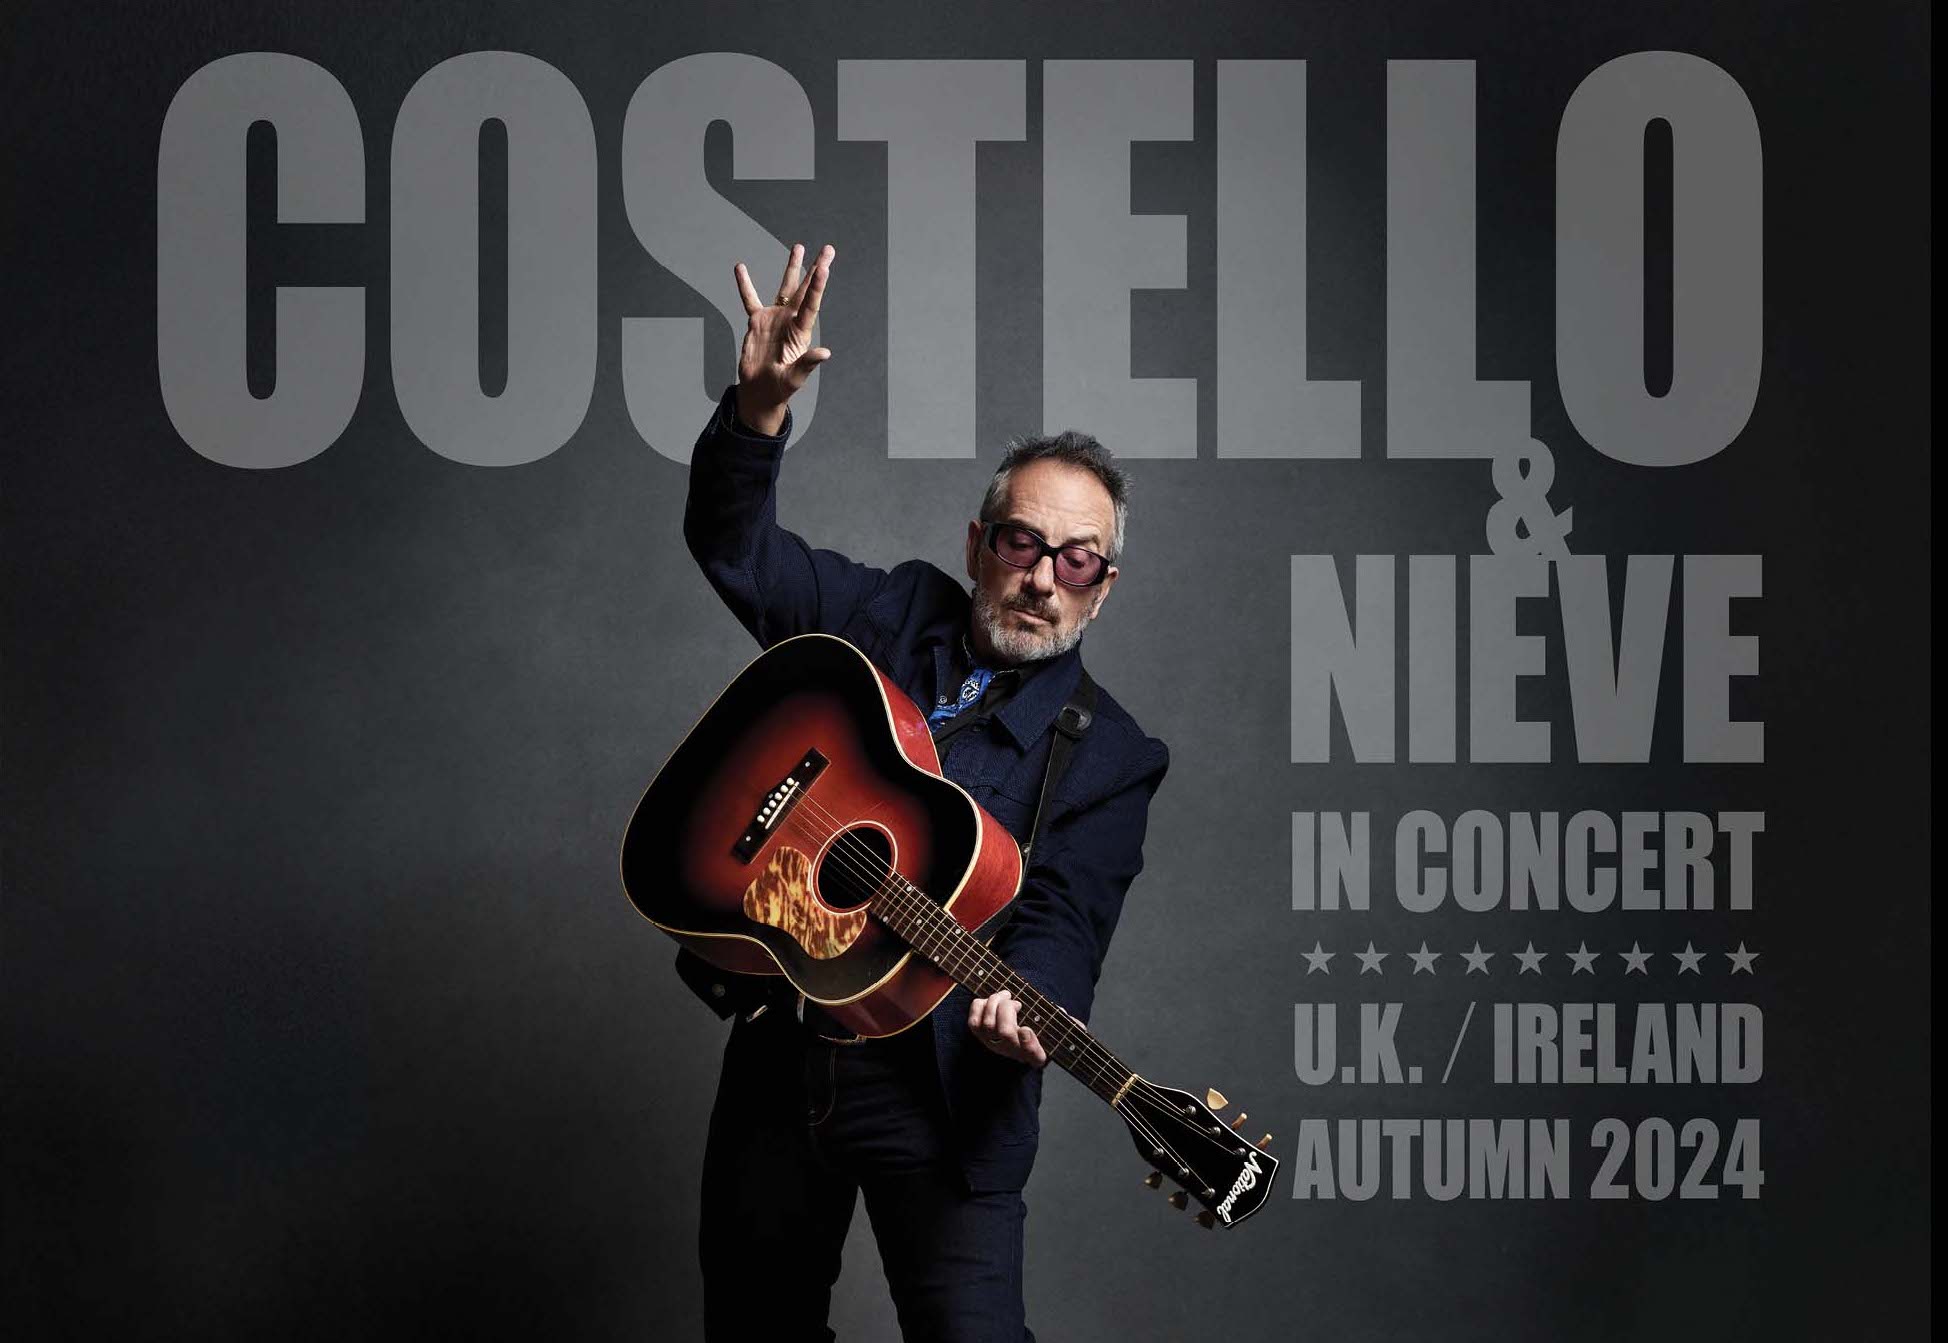 Elvis Costello - Steve Nieve al London Palladium Tickets